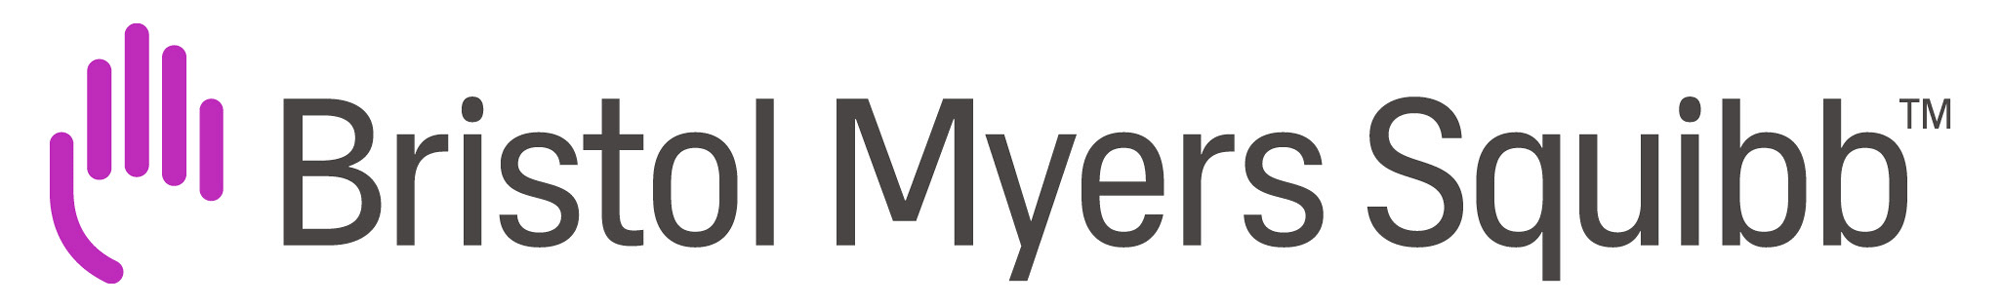 Bristol-Myers Squibb Brand Logo